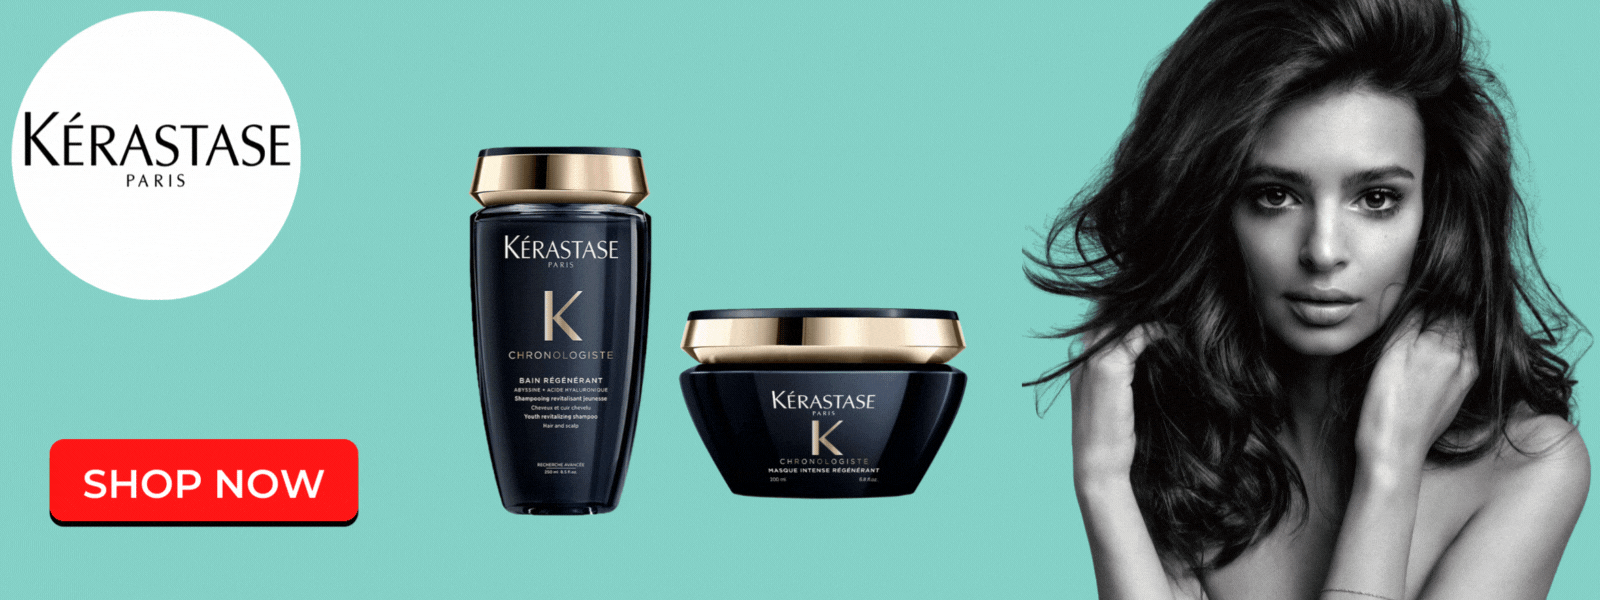 Kerastase - Professional Hair Care & Styling Products - Life Style Express - Online Cosmetics Store - Karachi Pakistan .